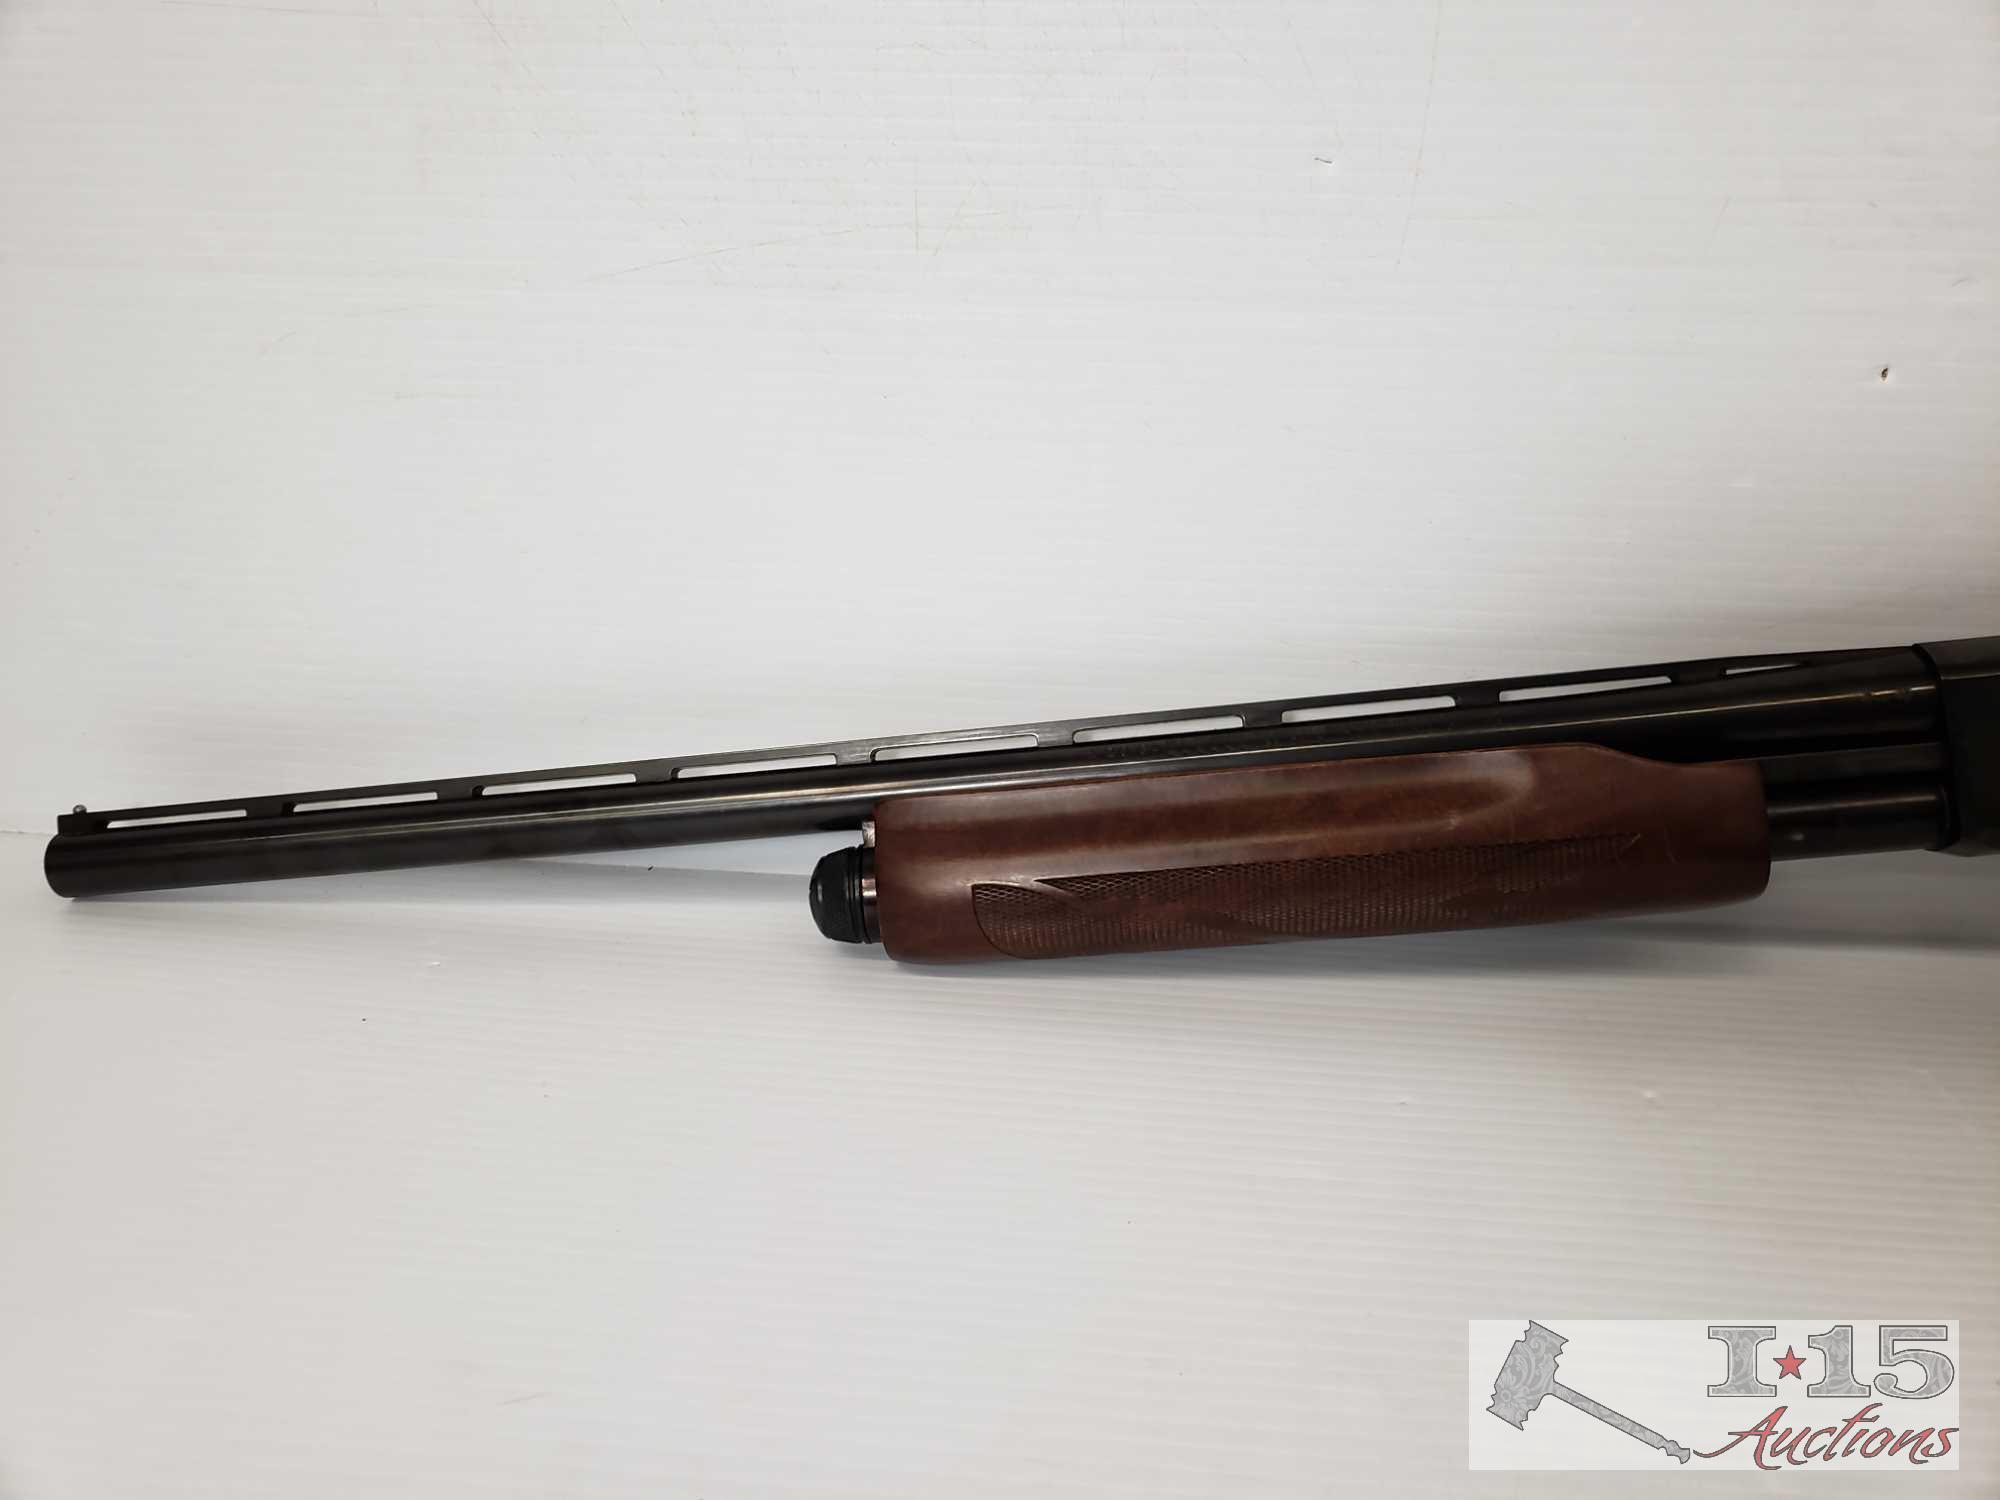 Remington Model 870LW Magnum 20 Guage Shoutgun